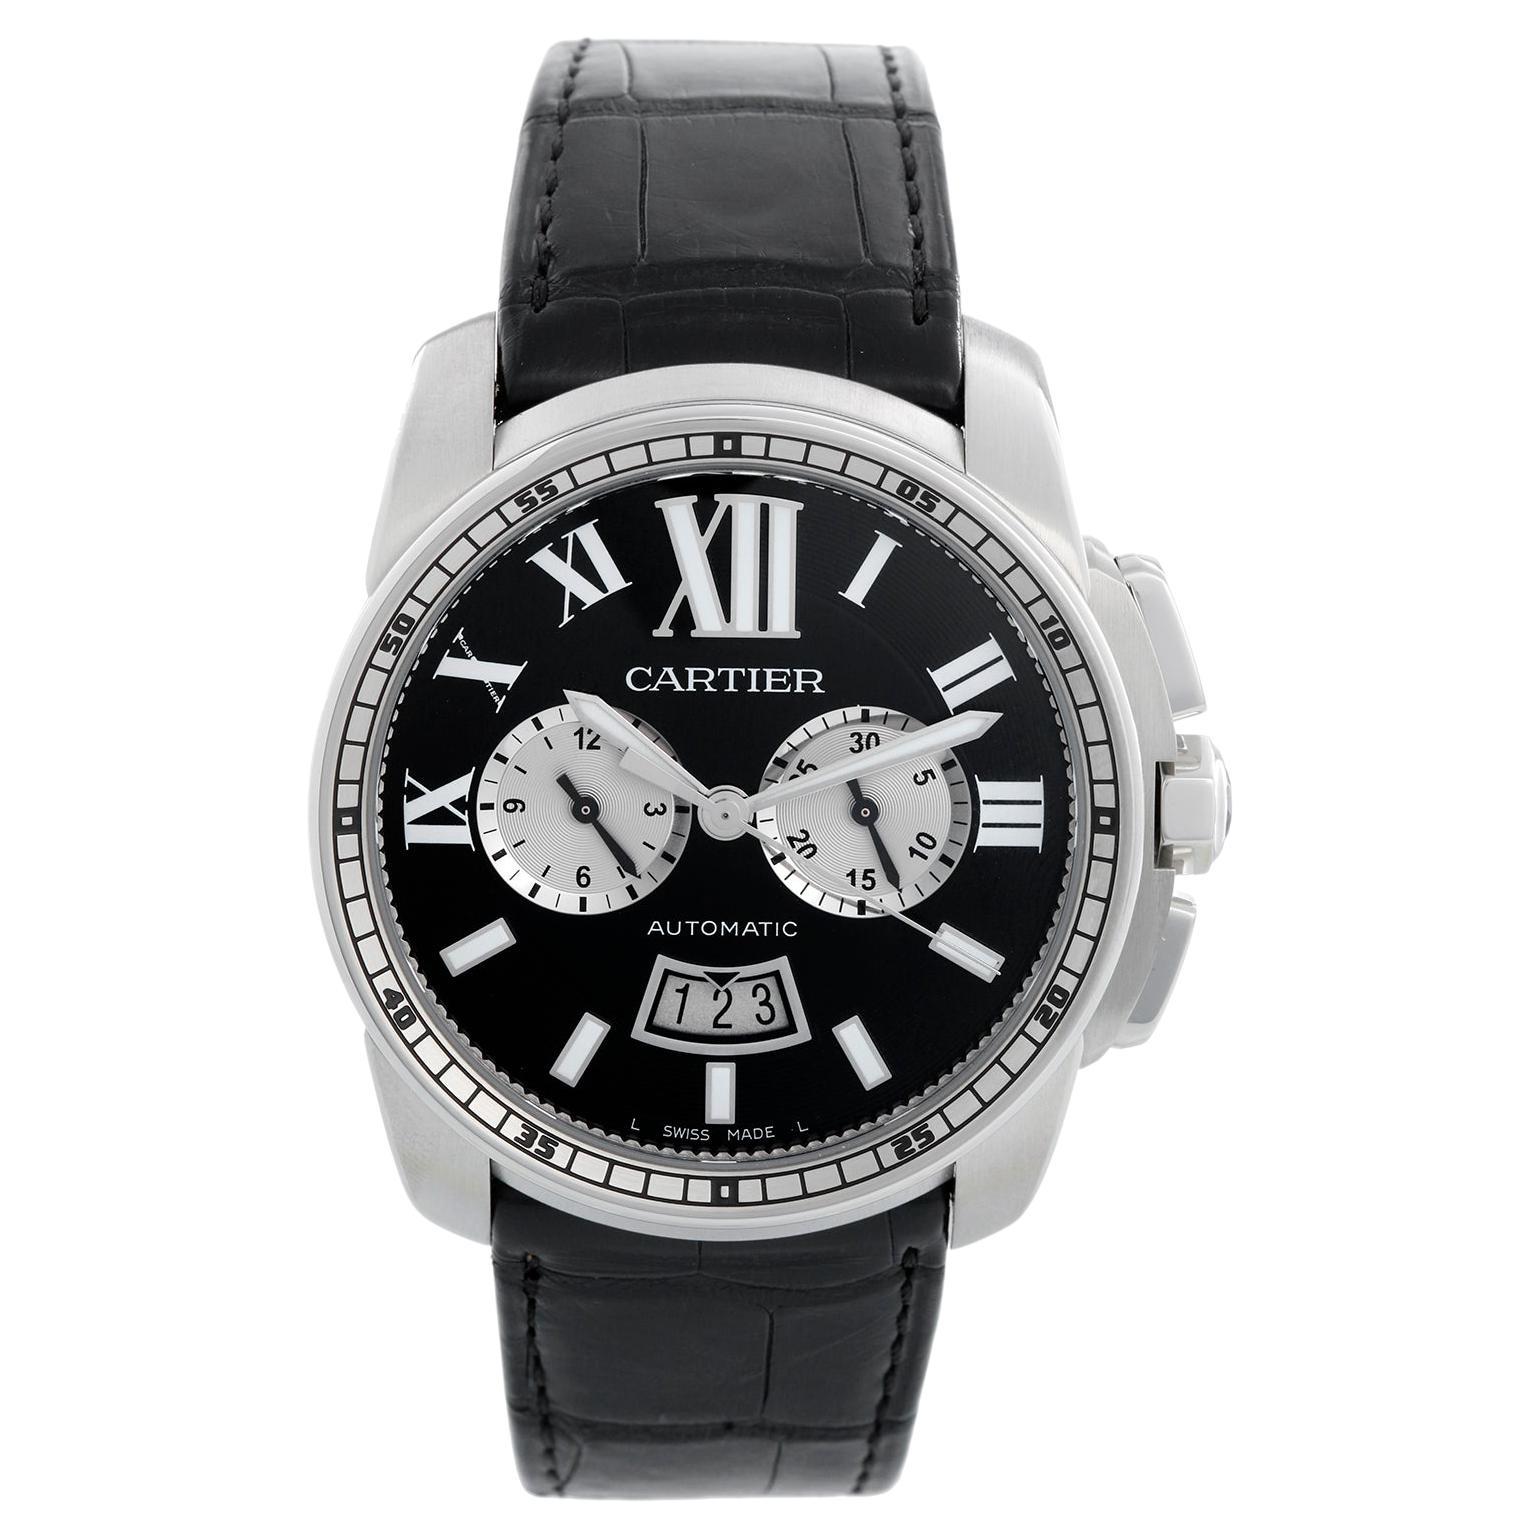 Cartier Calibre Stainless Steel Men's Watch 3578